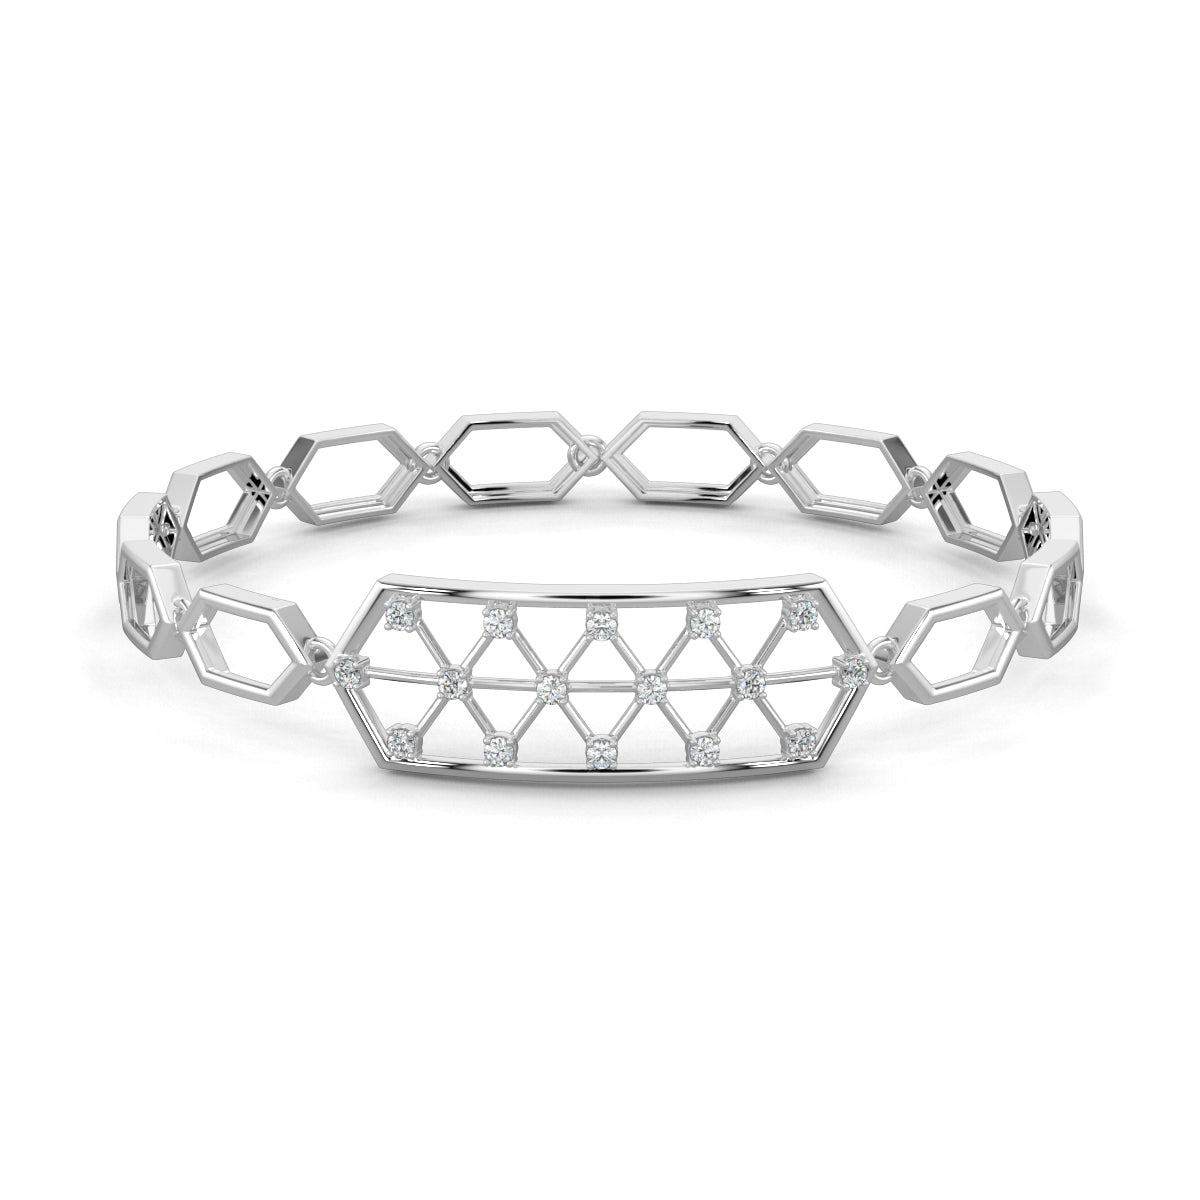 White Gold, Diamond Bracelet, Crystalline Hex Bracelet, Natural diamonds, lab-grown diamonds, hexagonal bracelet, six-sided links, diamond chain bracelet, luxury bracelet